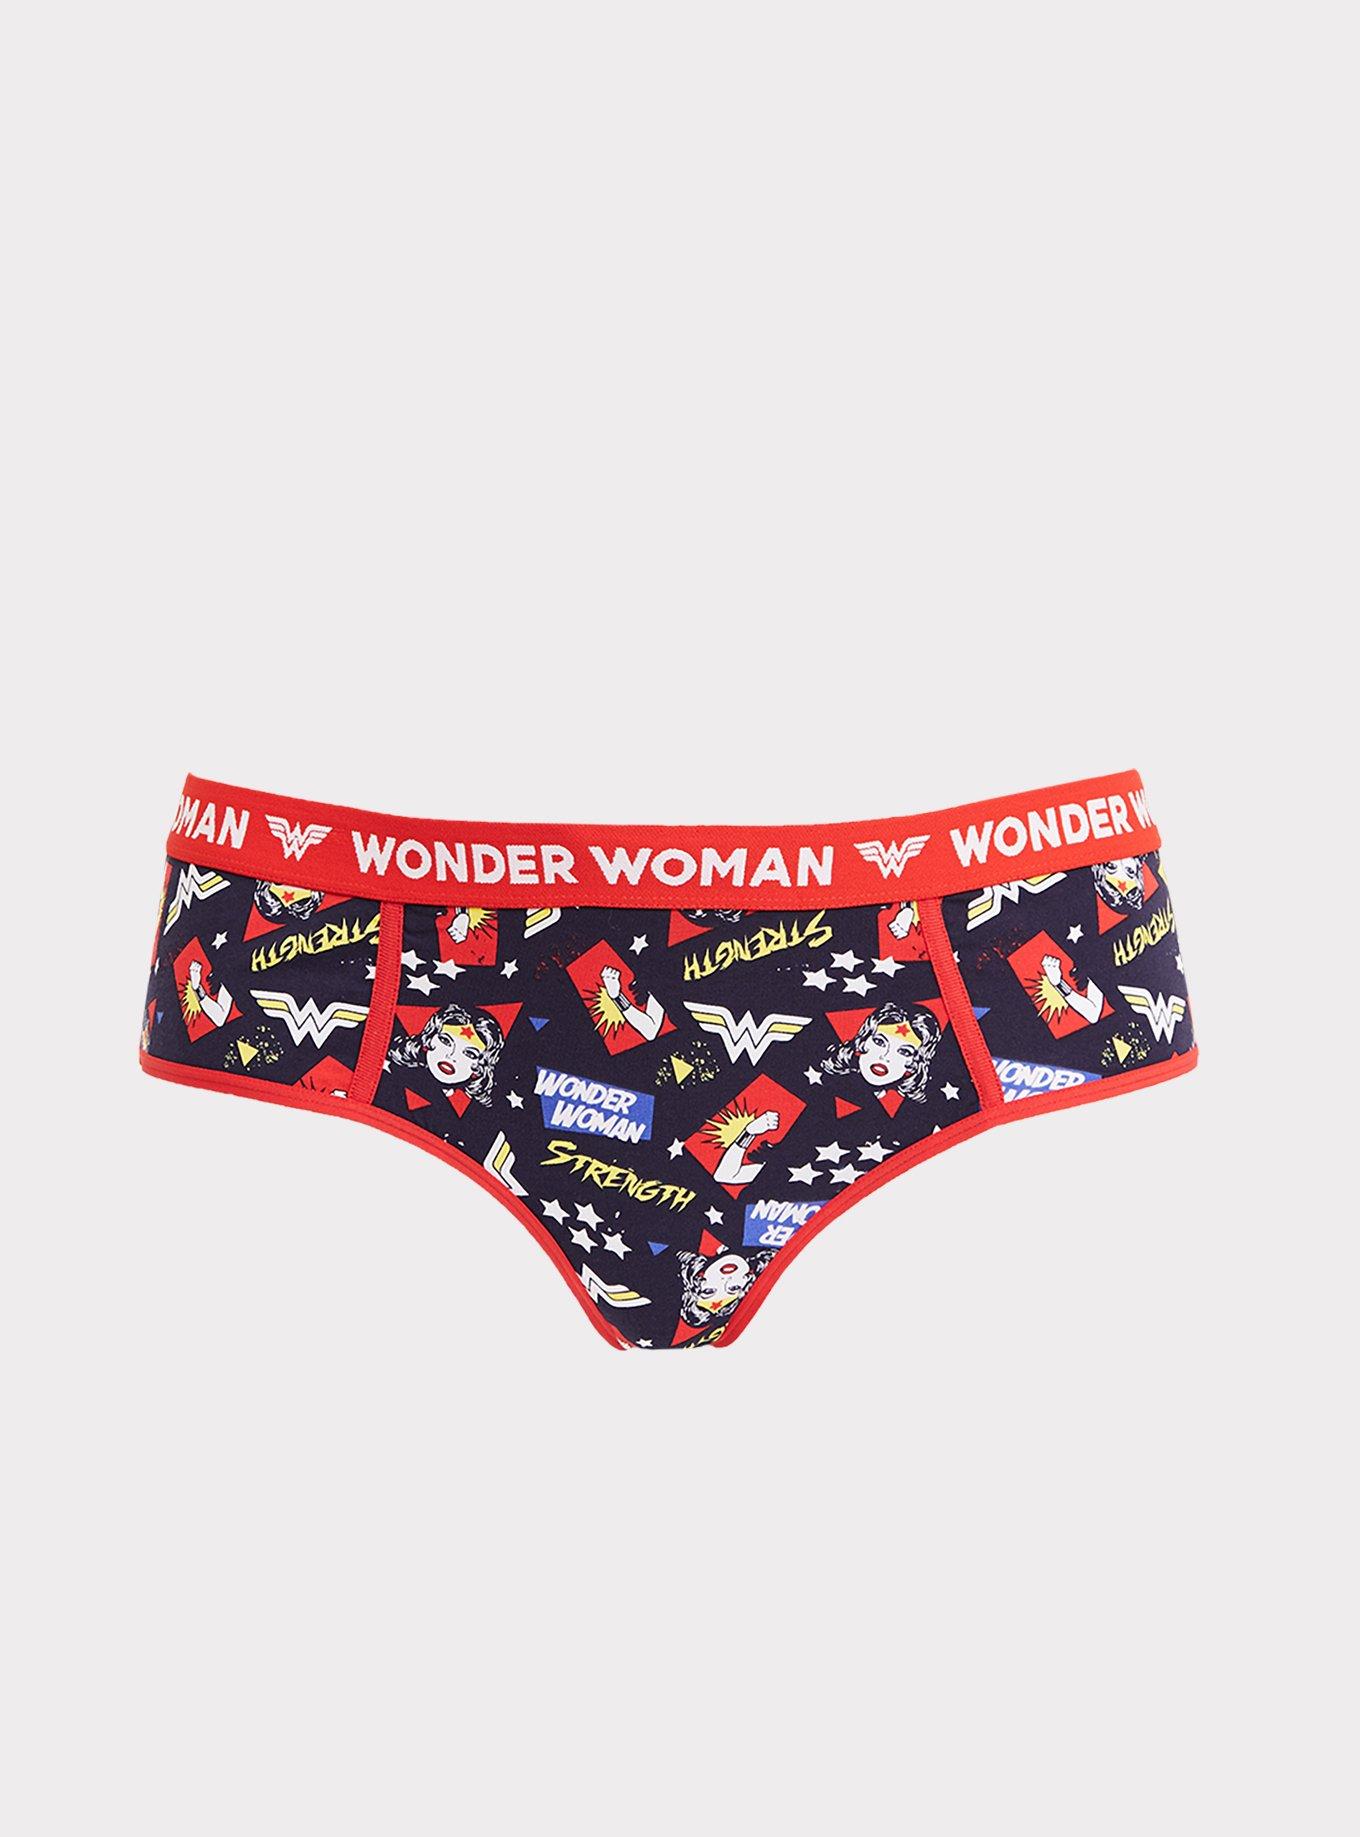 Lingerie Panties Wonder Woman High Rise Knickers Costume